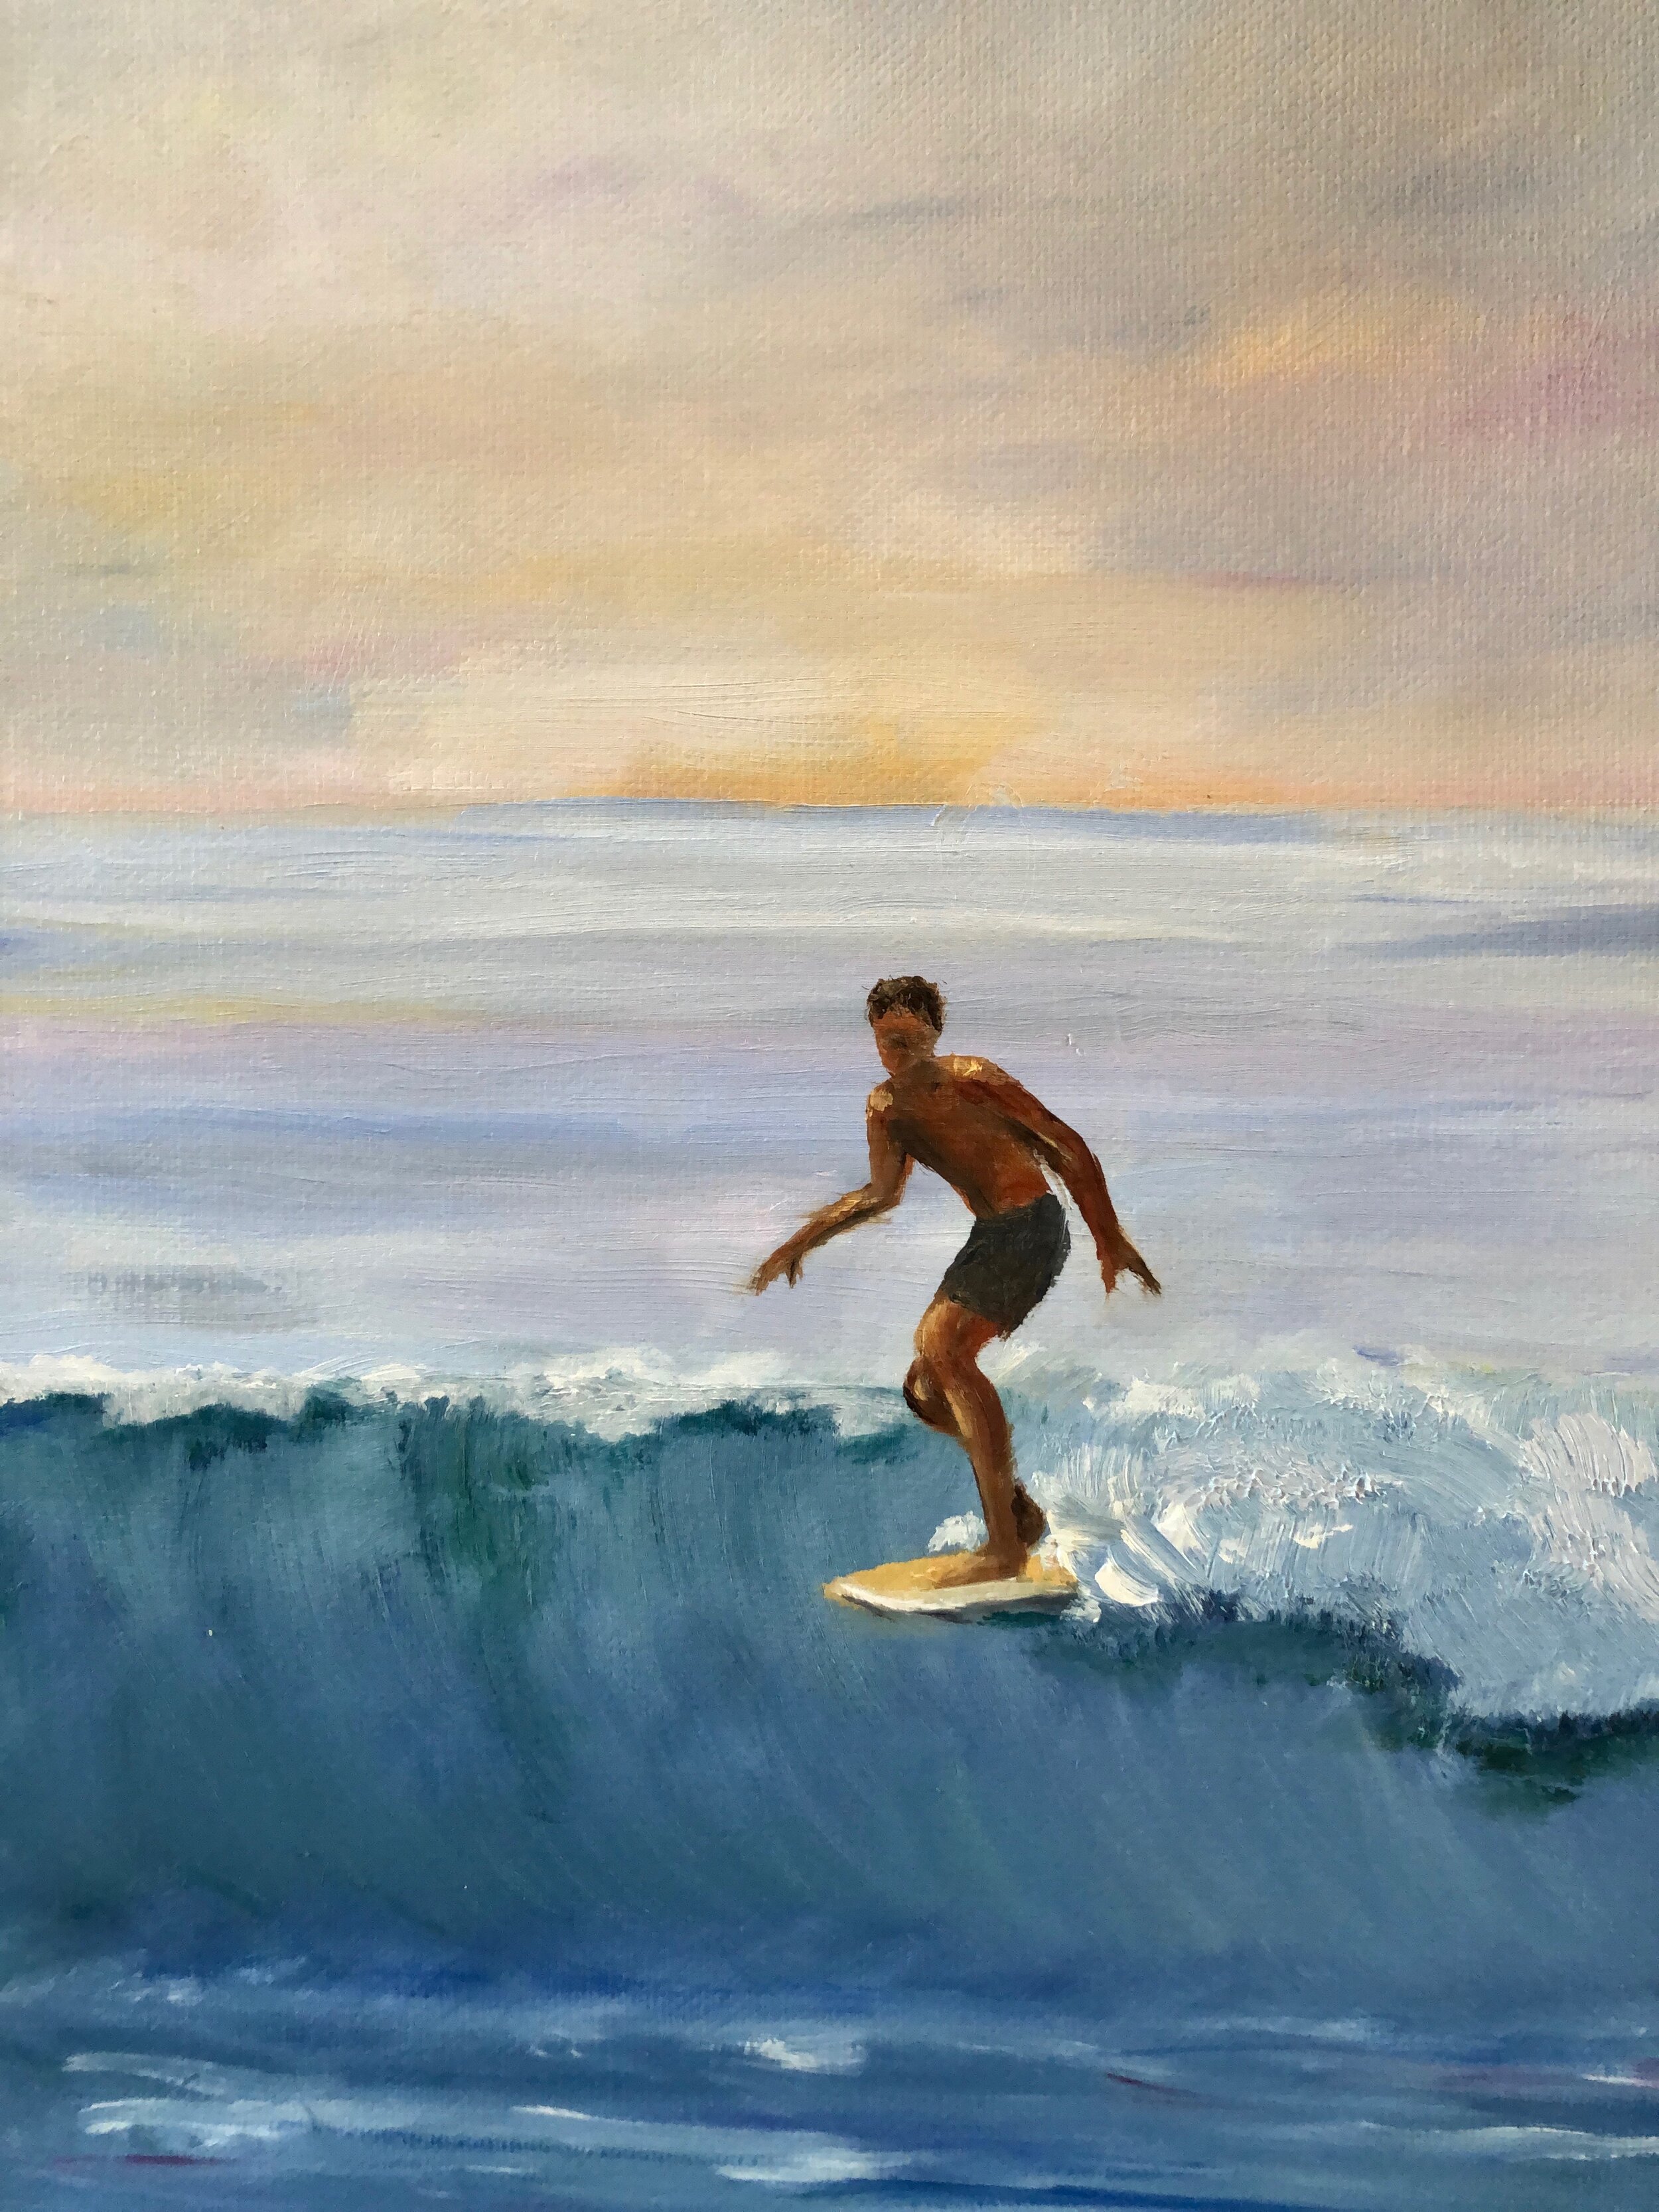 Surf's Up #1